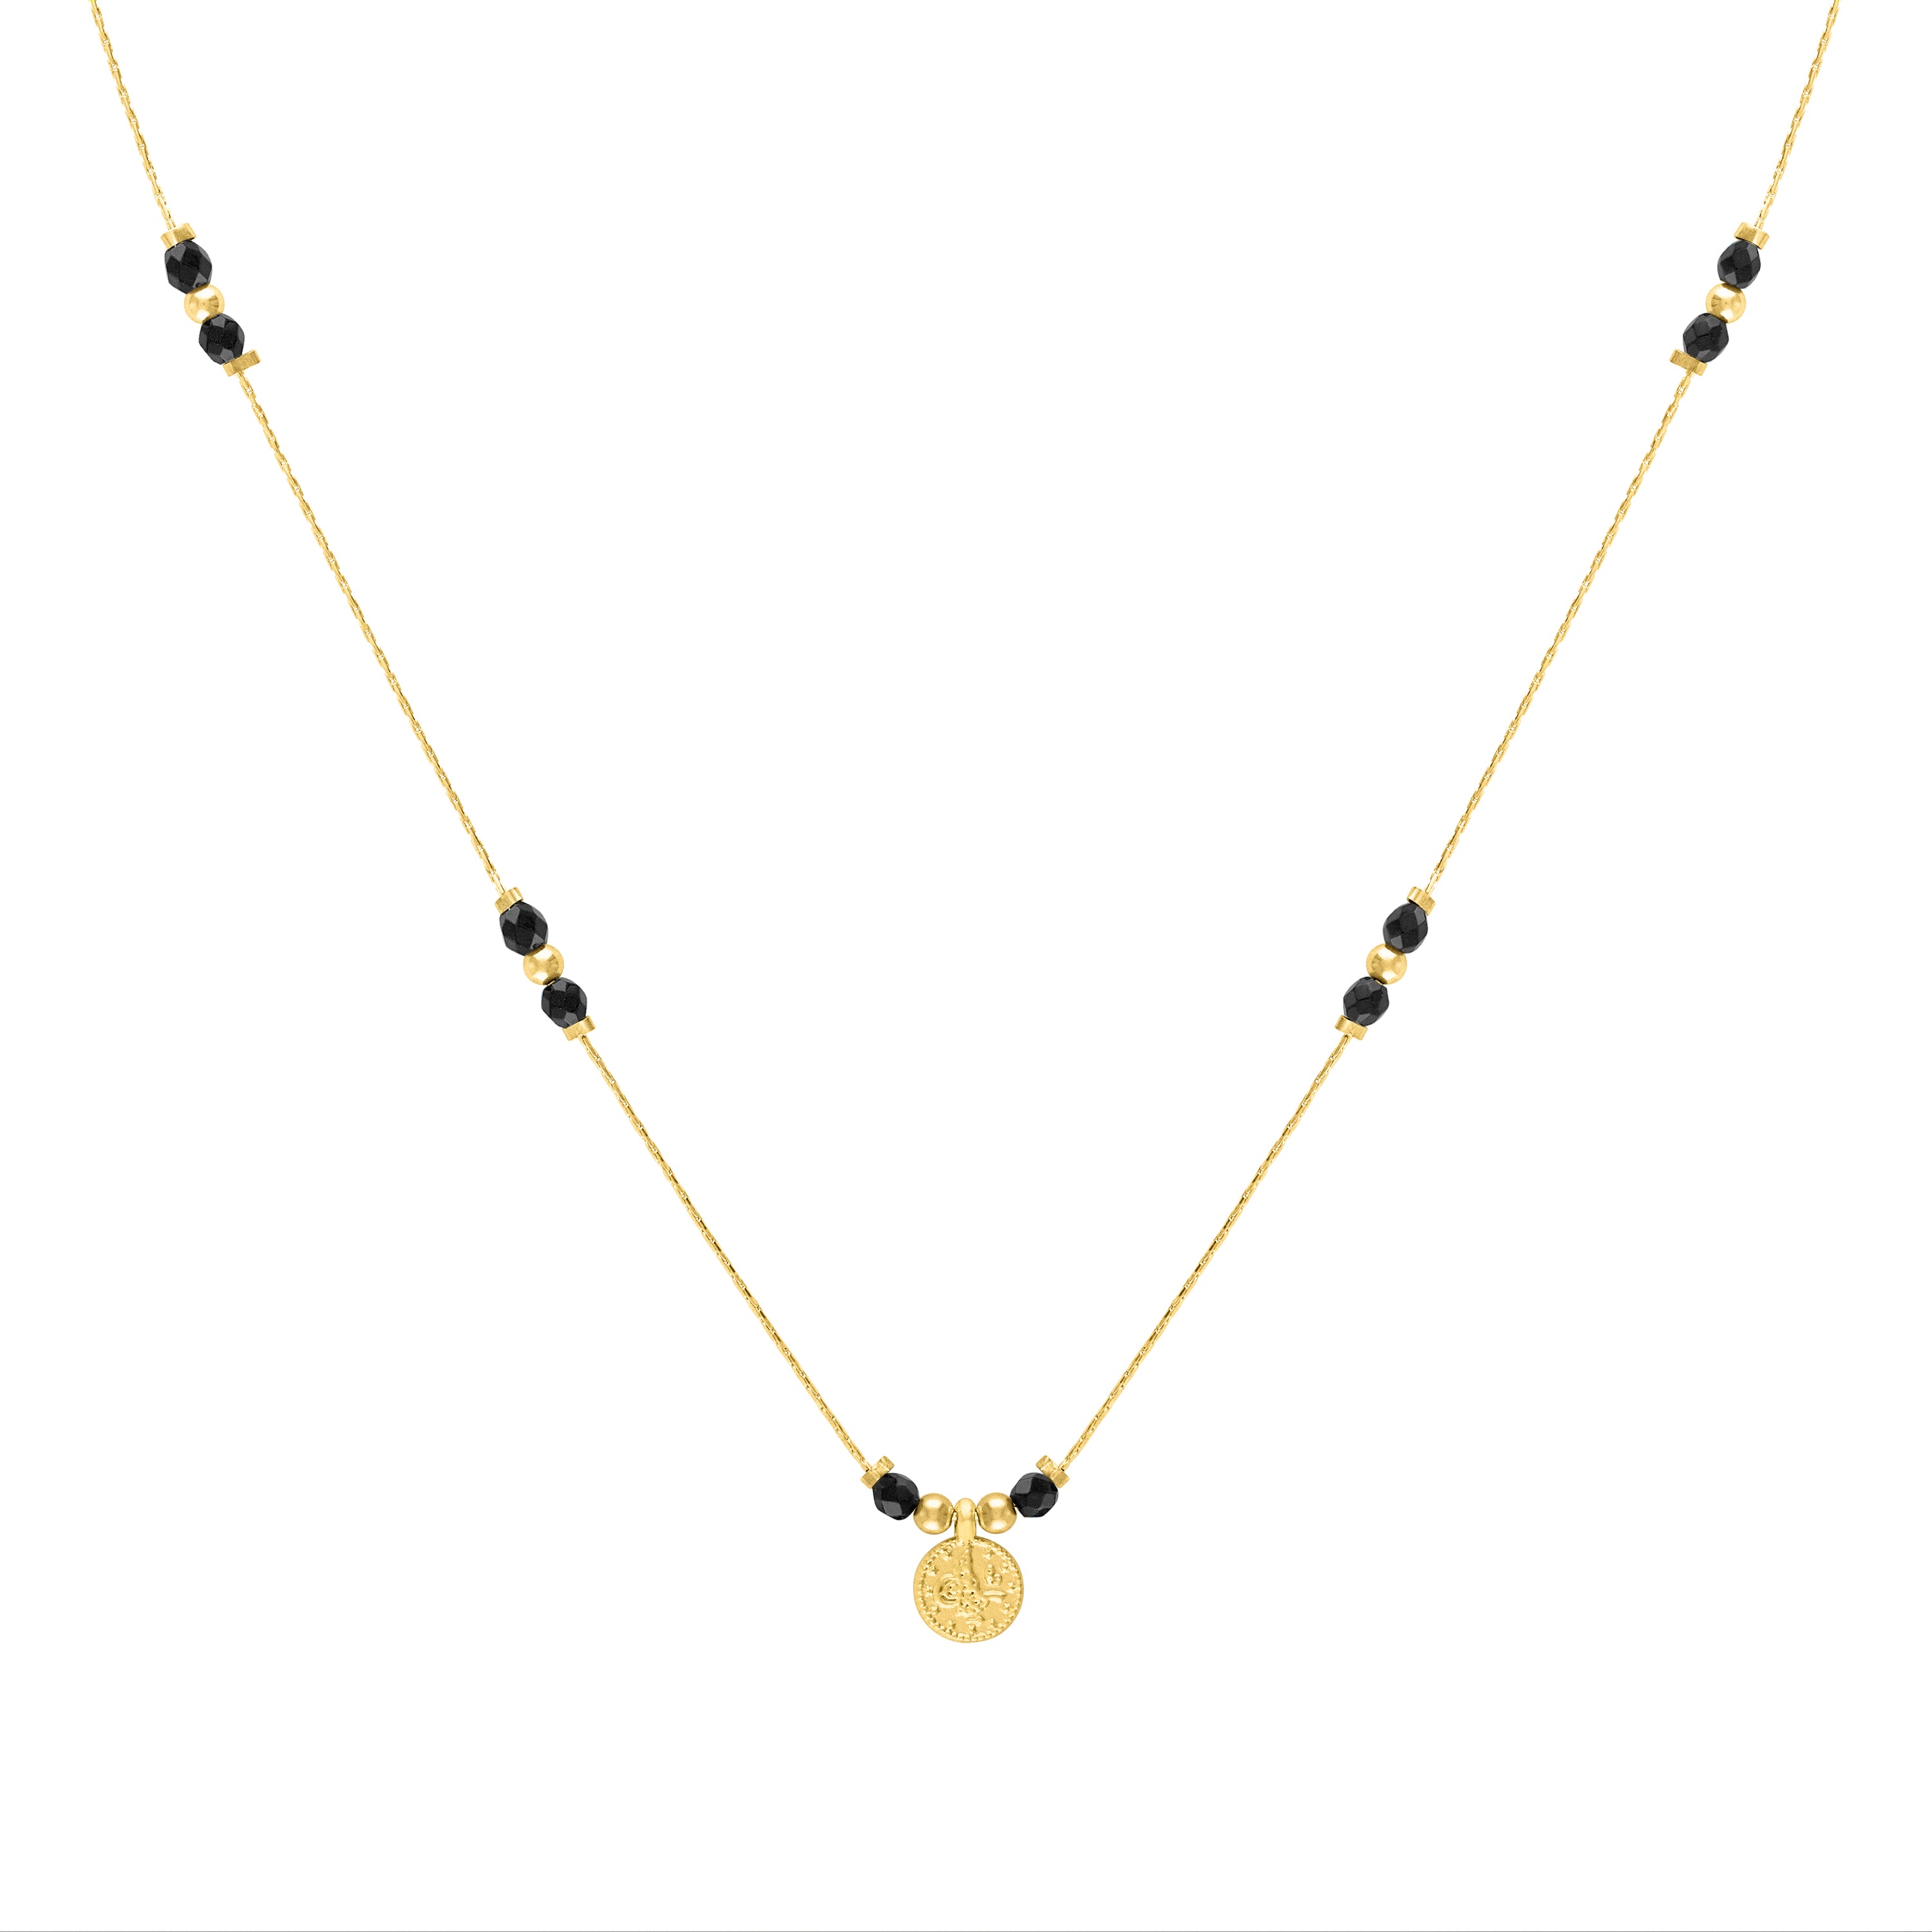 vintage black and gold tone beaded necklace and bracelet set | eBay